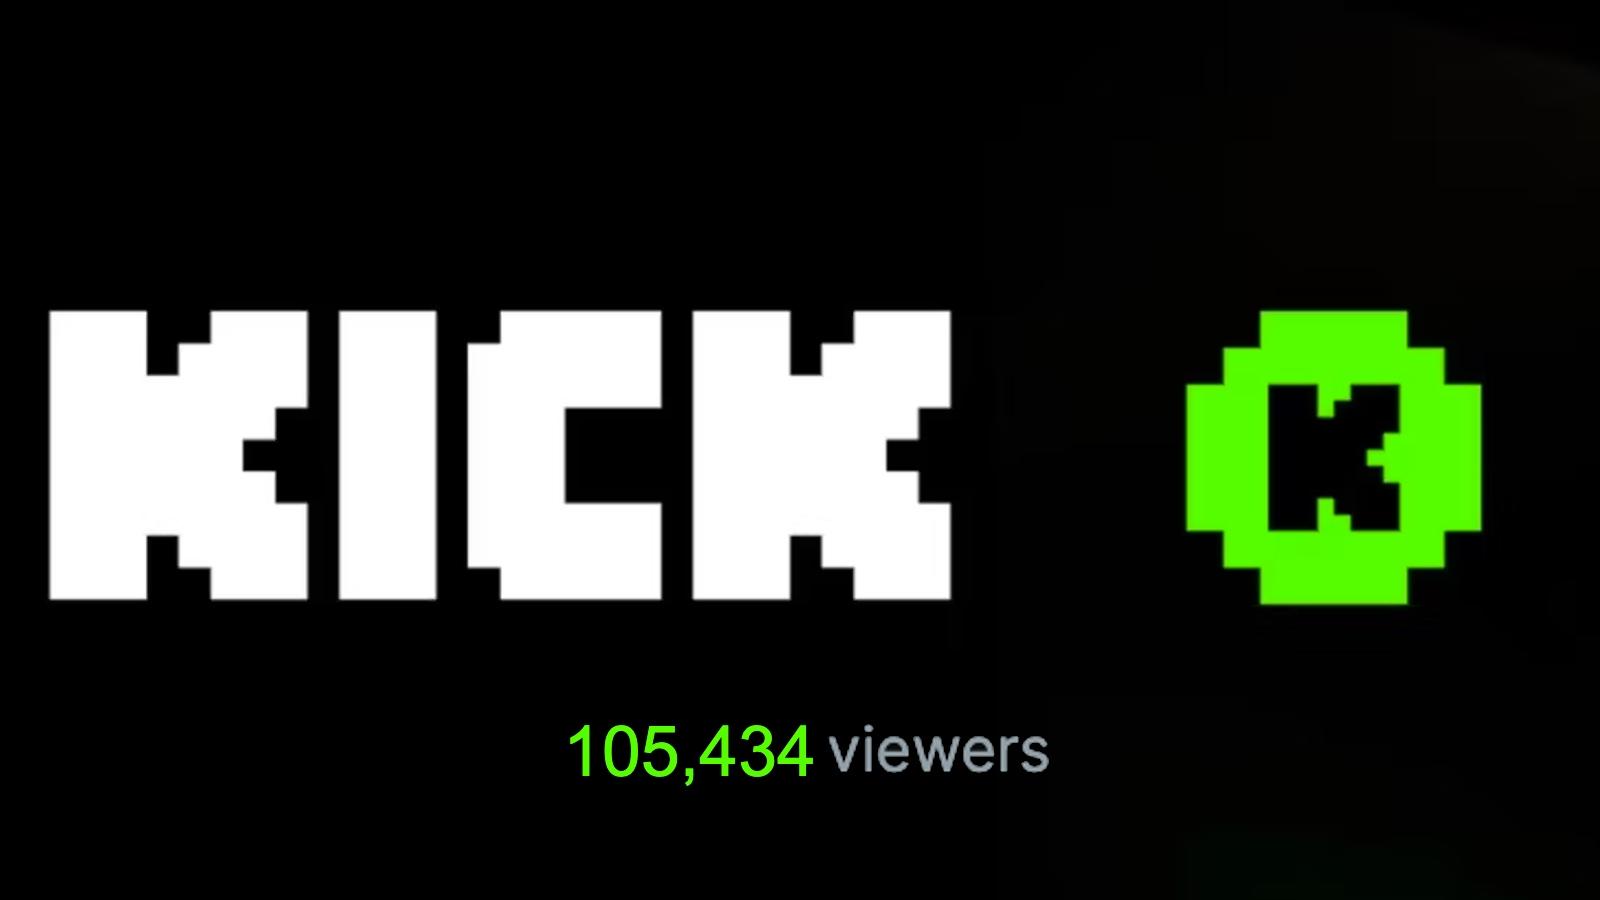 Kick logo with viewer count below